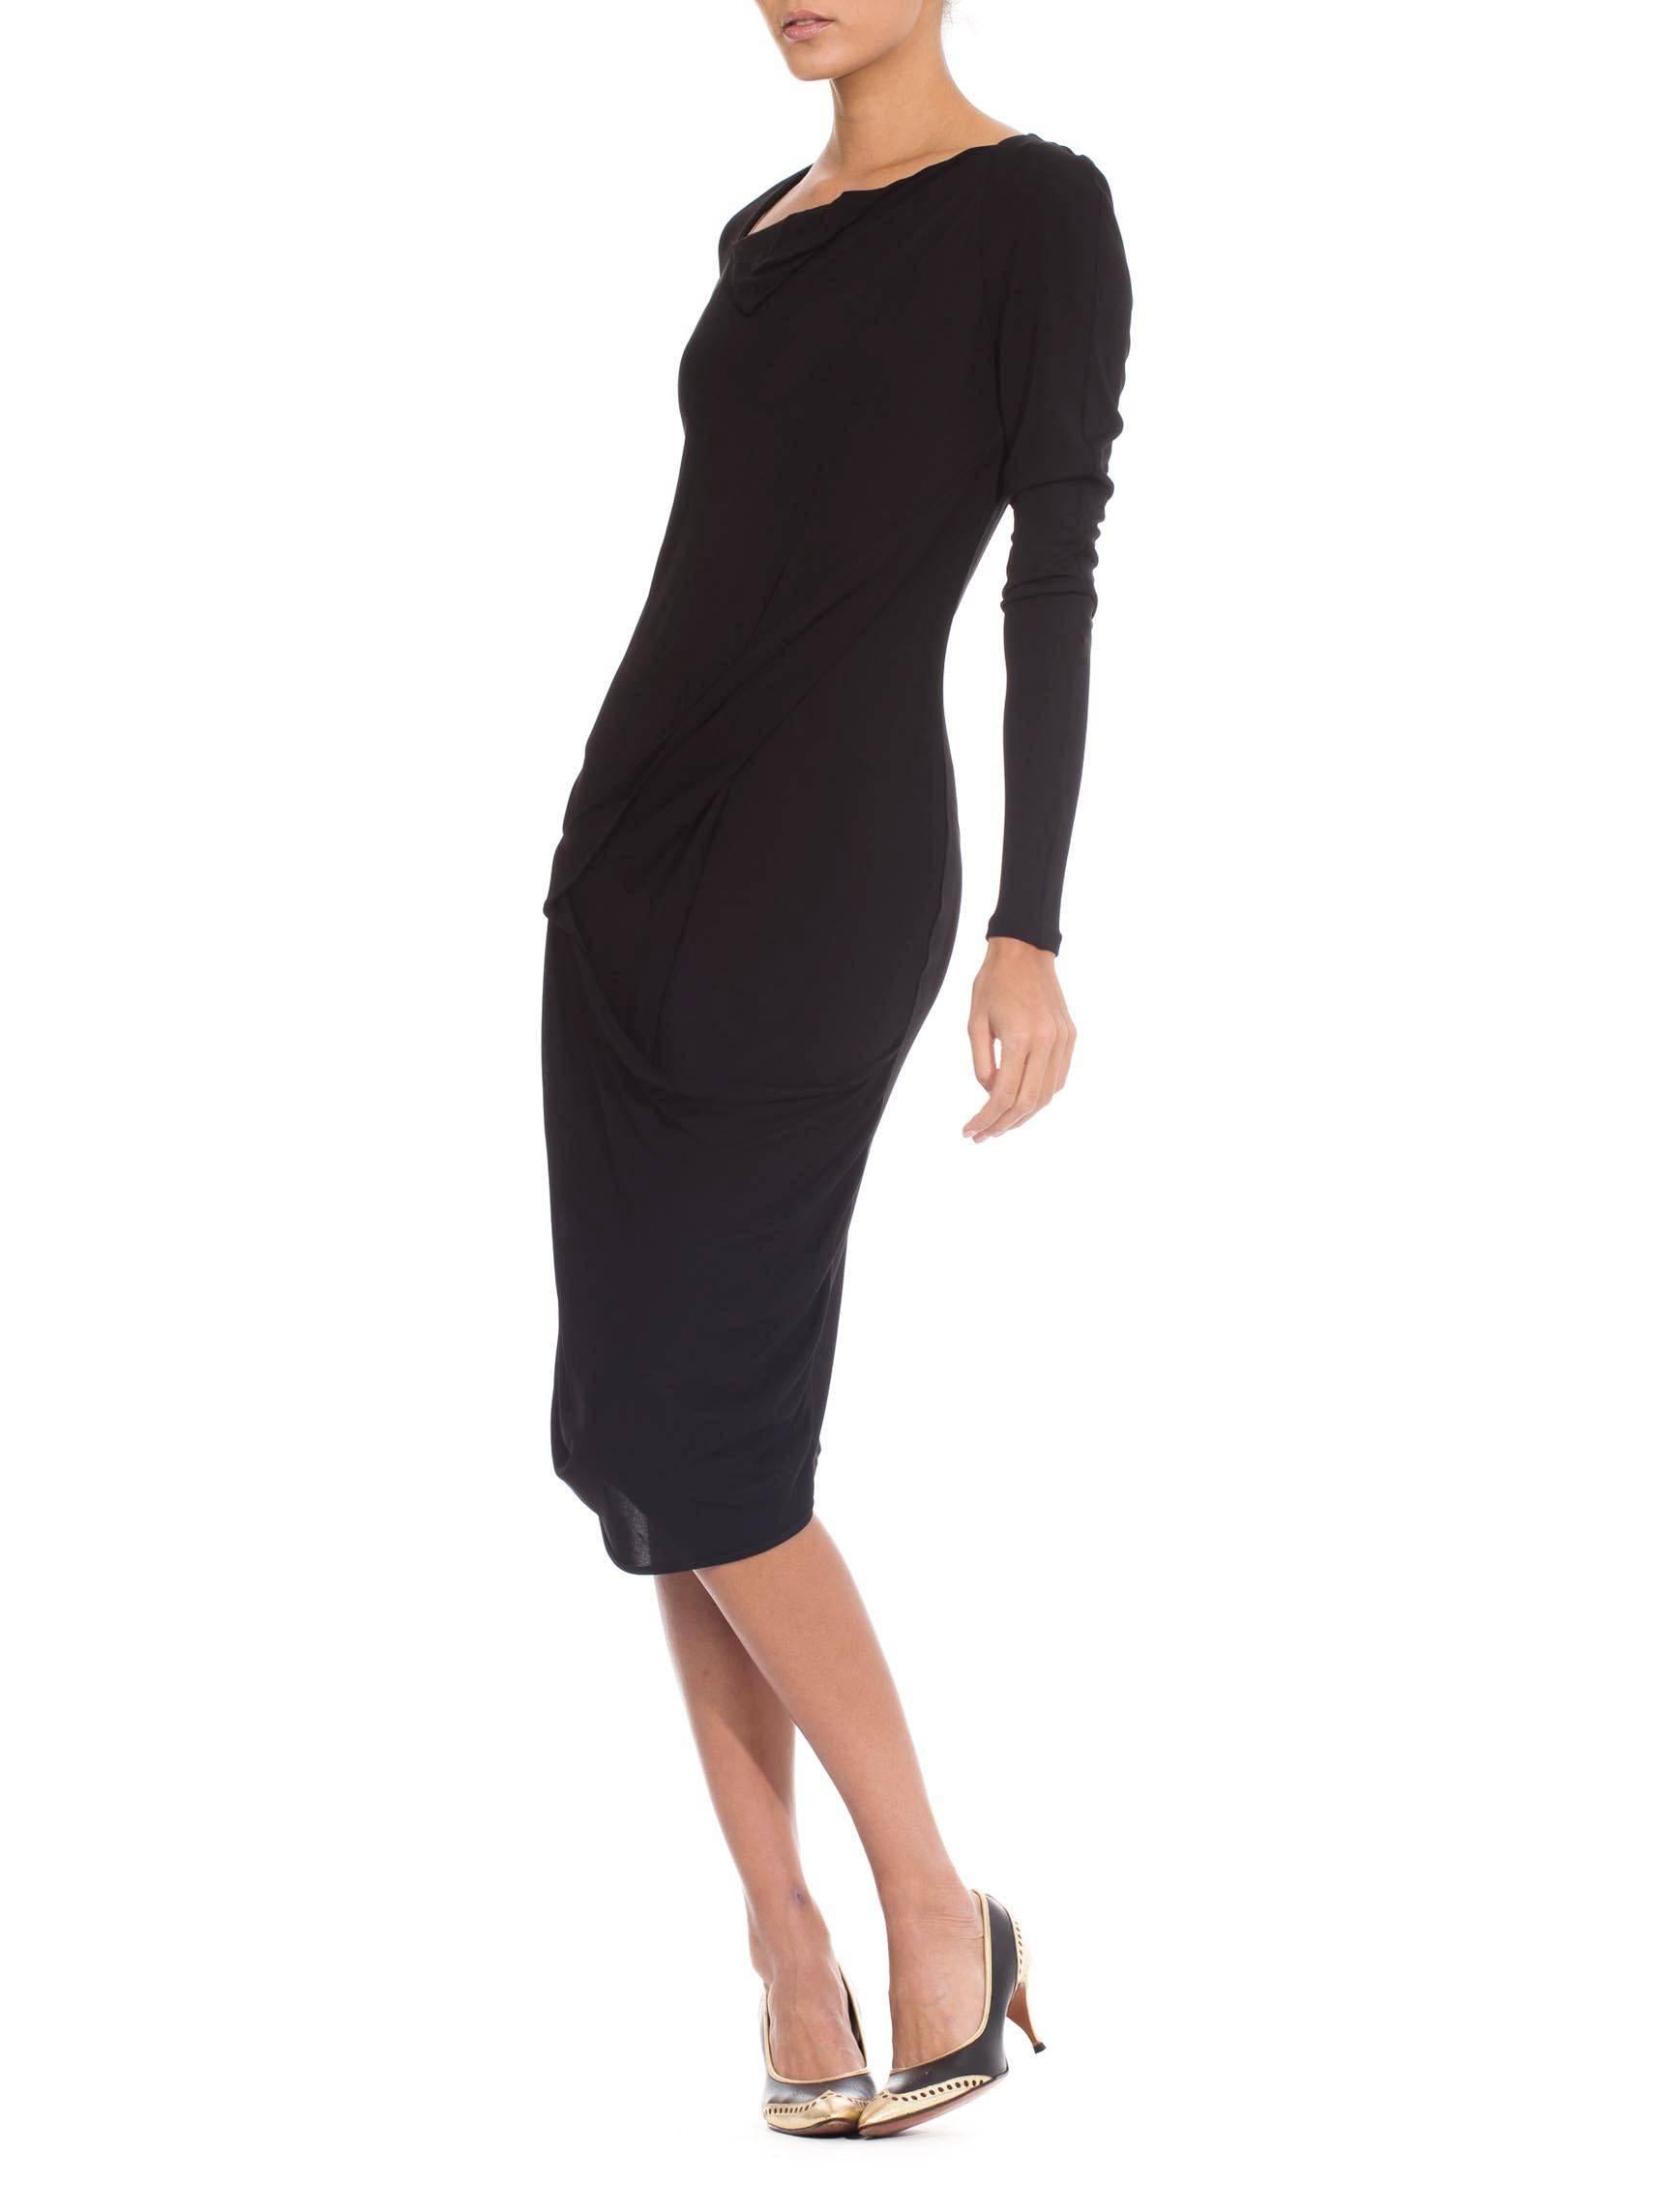 Women's Martin Margiela Black Draped Jersey Dress